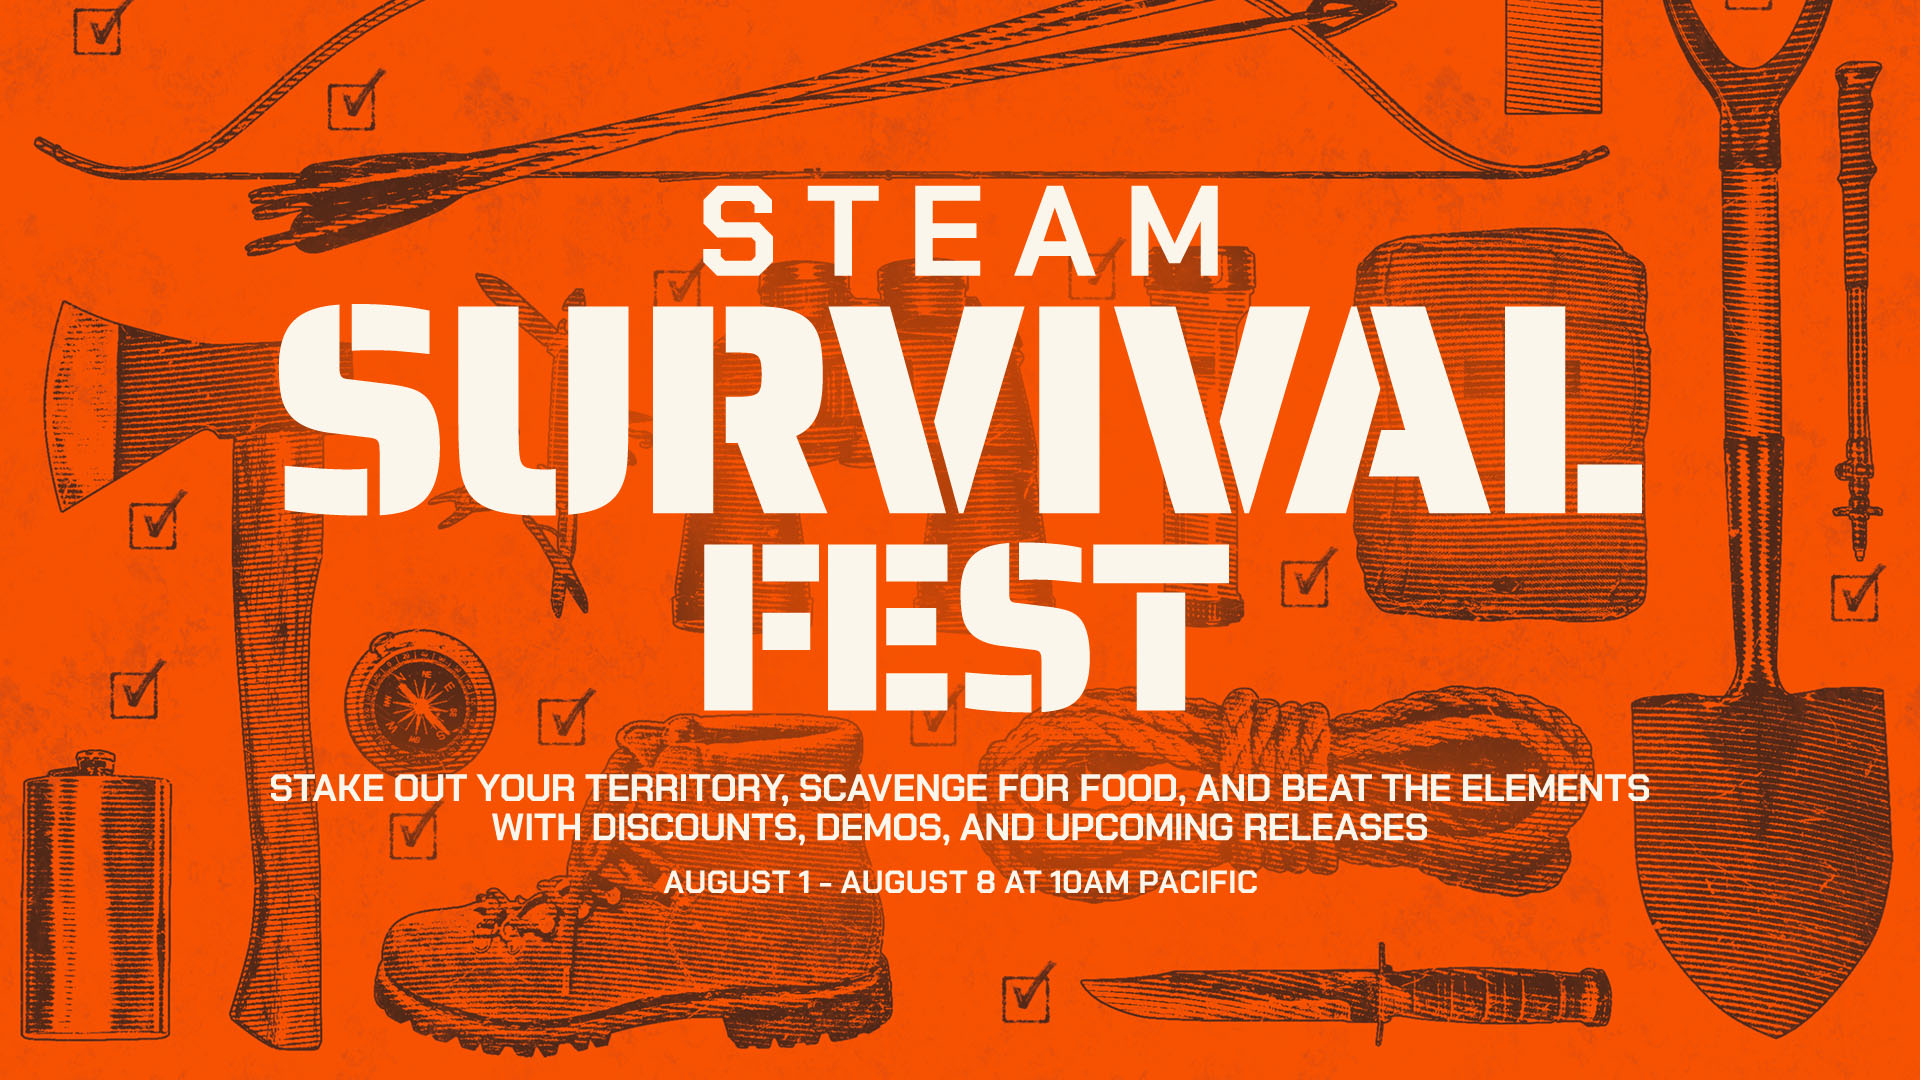 Survival Festival on Steam starts on August 1